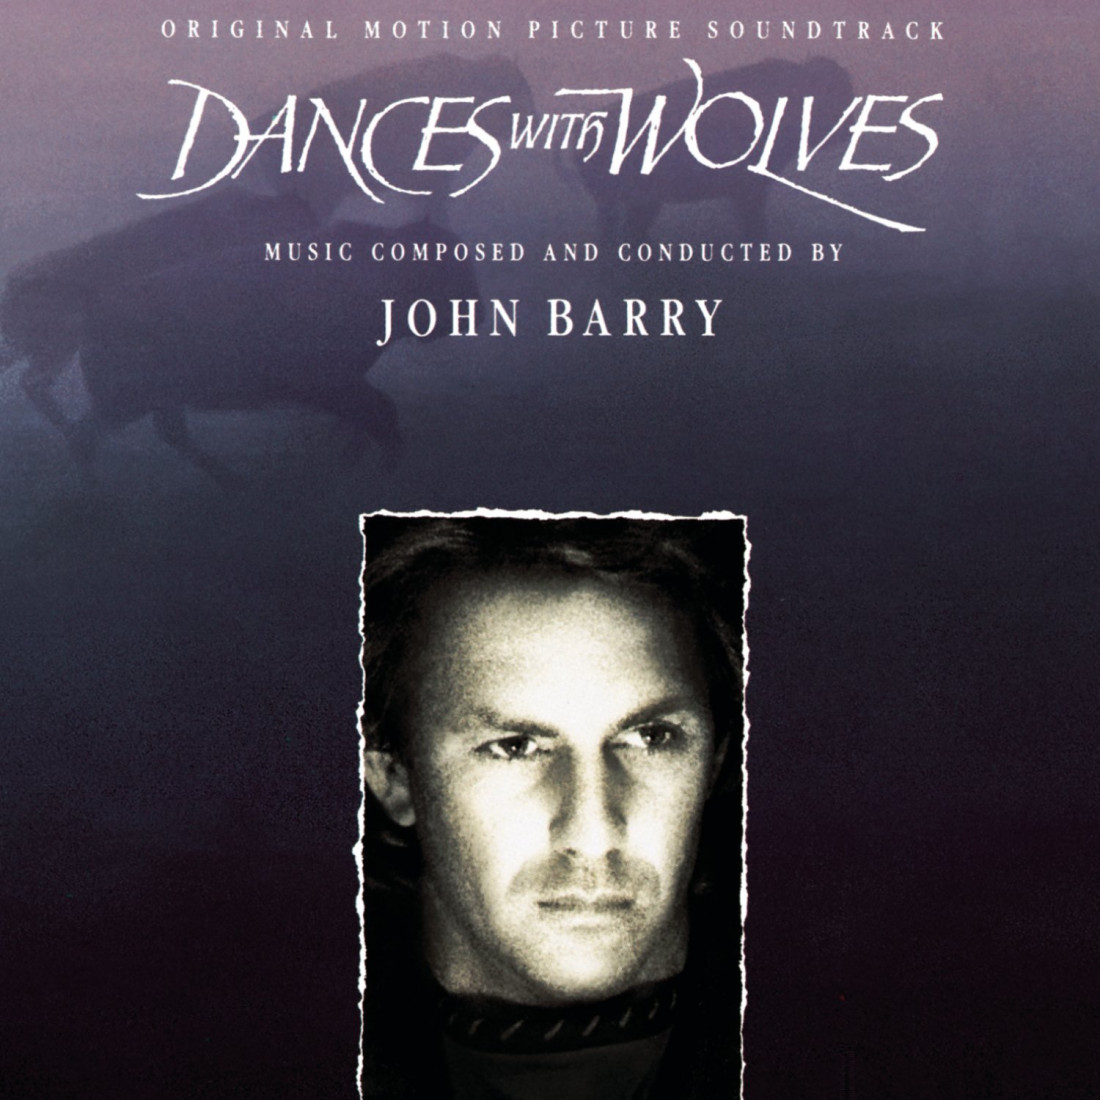 [John Barry] The John Dunbar Theme (Dances with Wolves OST) Photo-Image